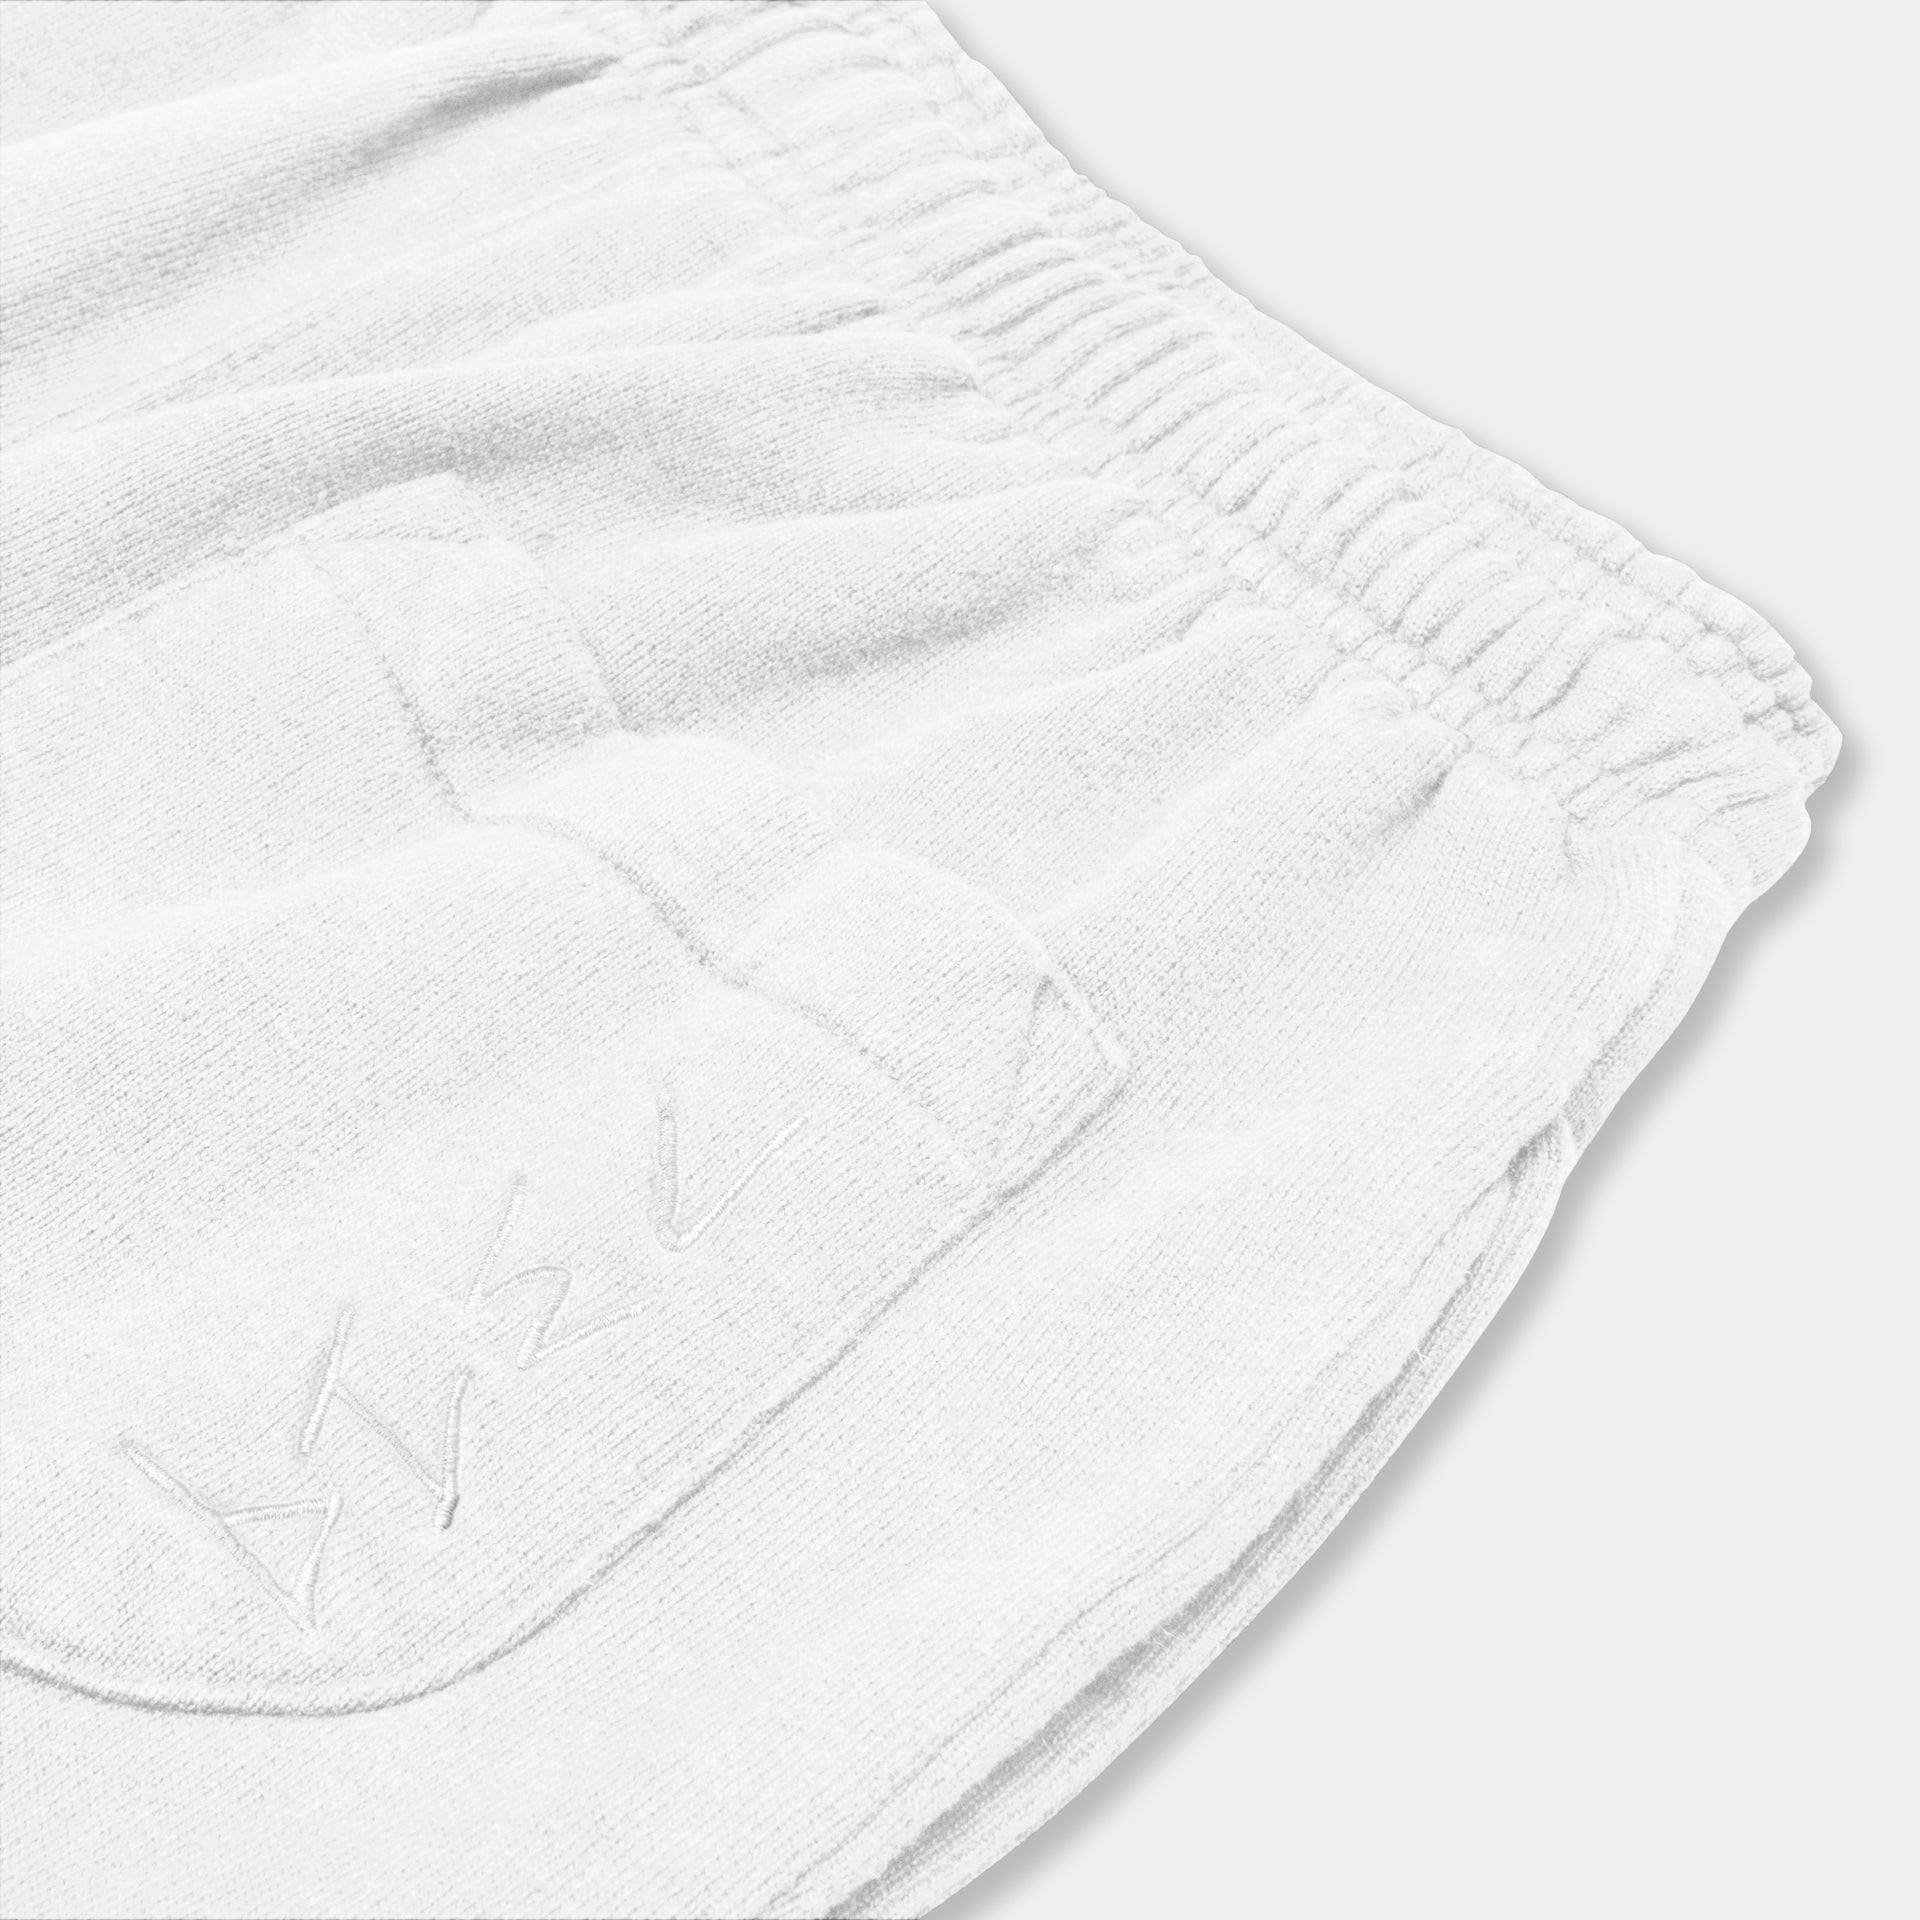 White hemp sweatpants. 7319 logo down side of back pocket. Zoomed shot of back pocket. Sustainable street wear. Natural organic fabric. 